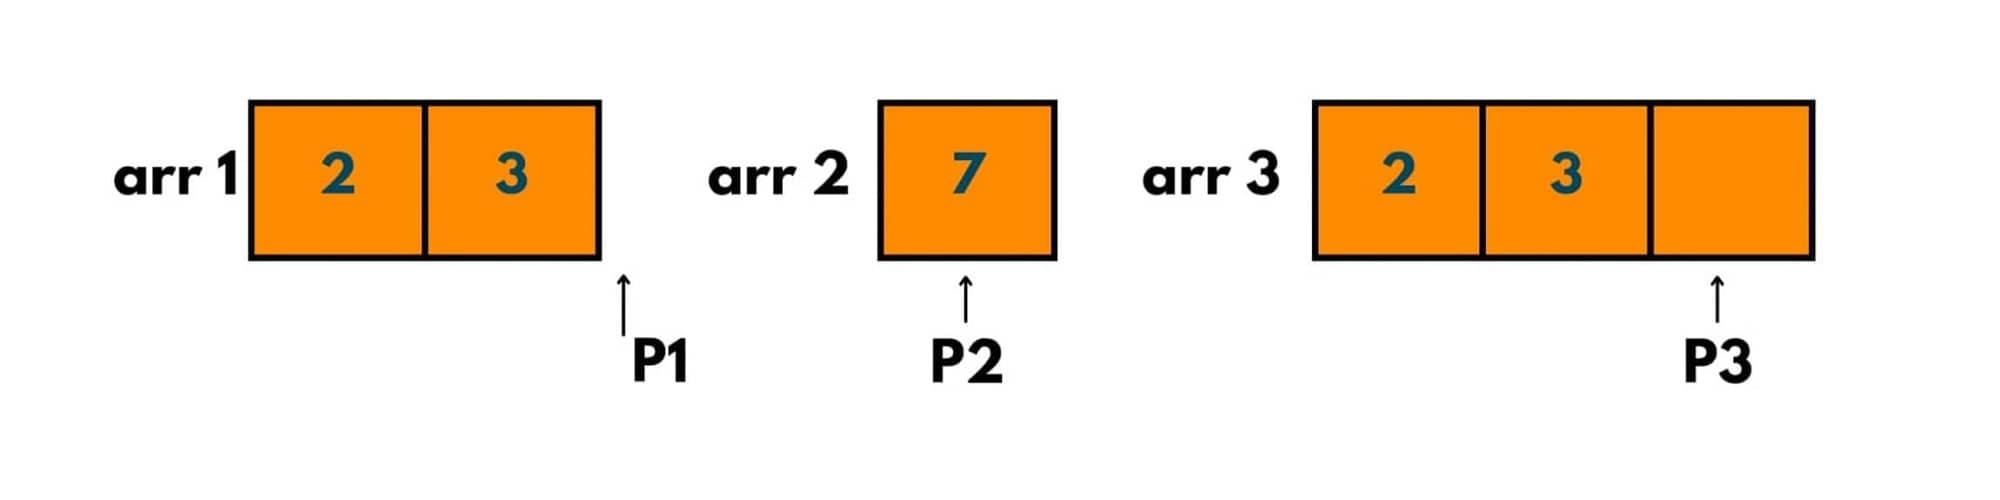 merge sort example 10